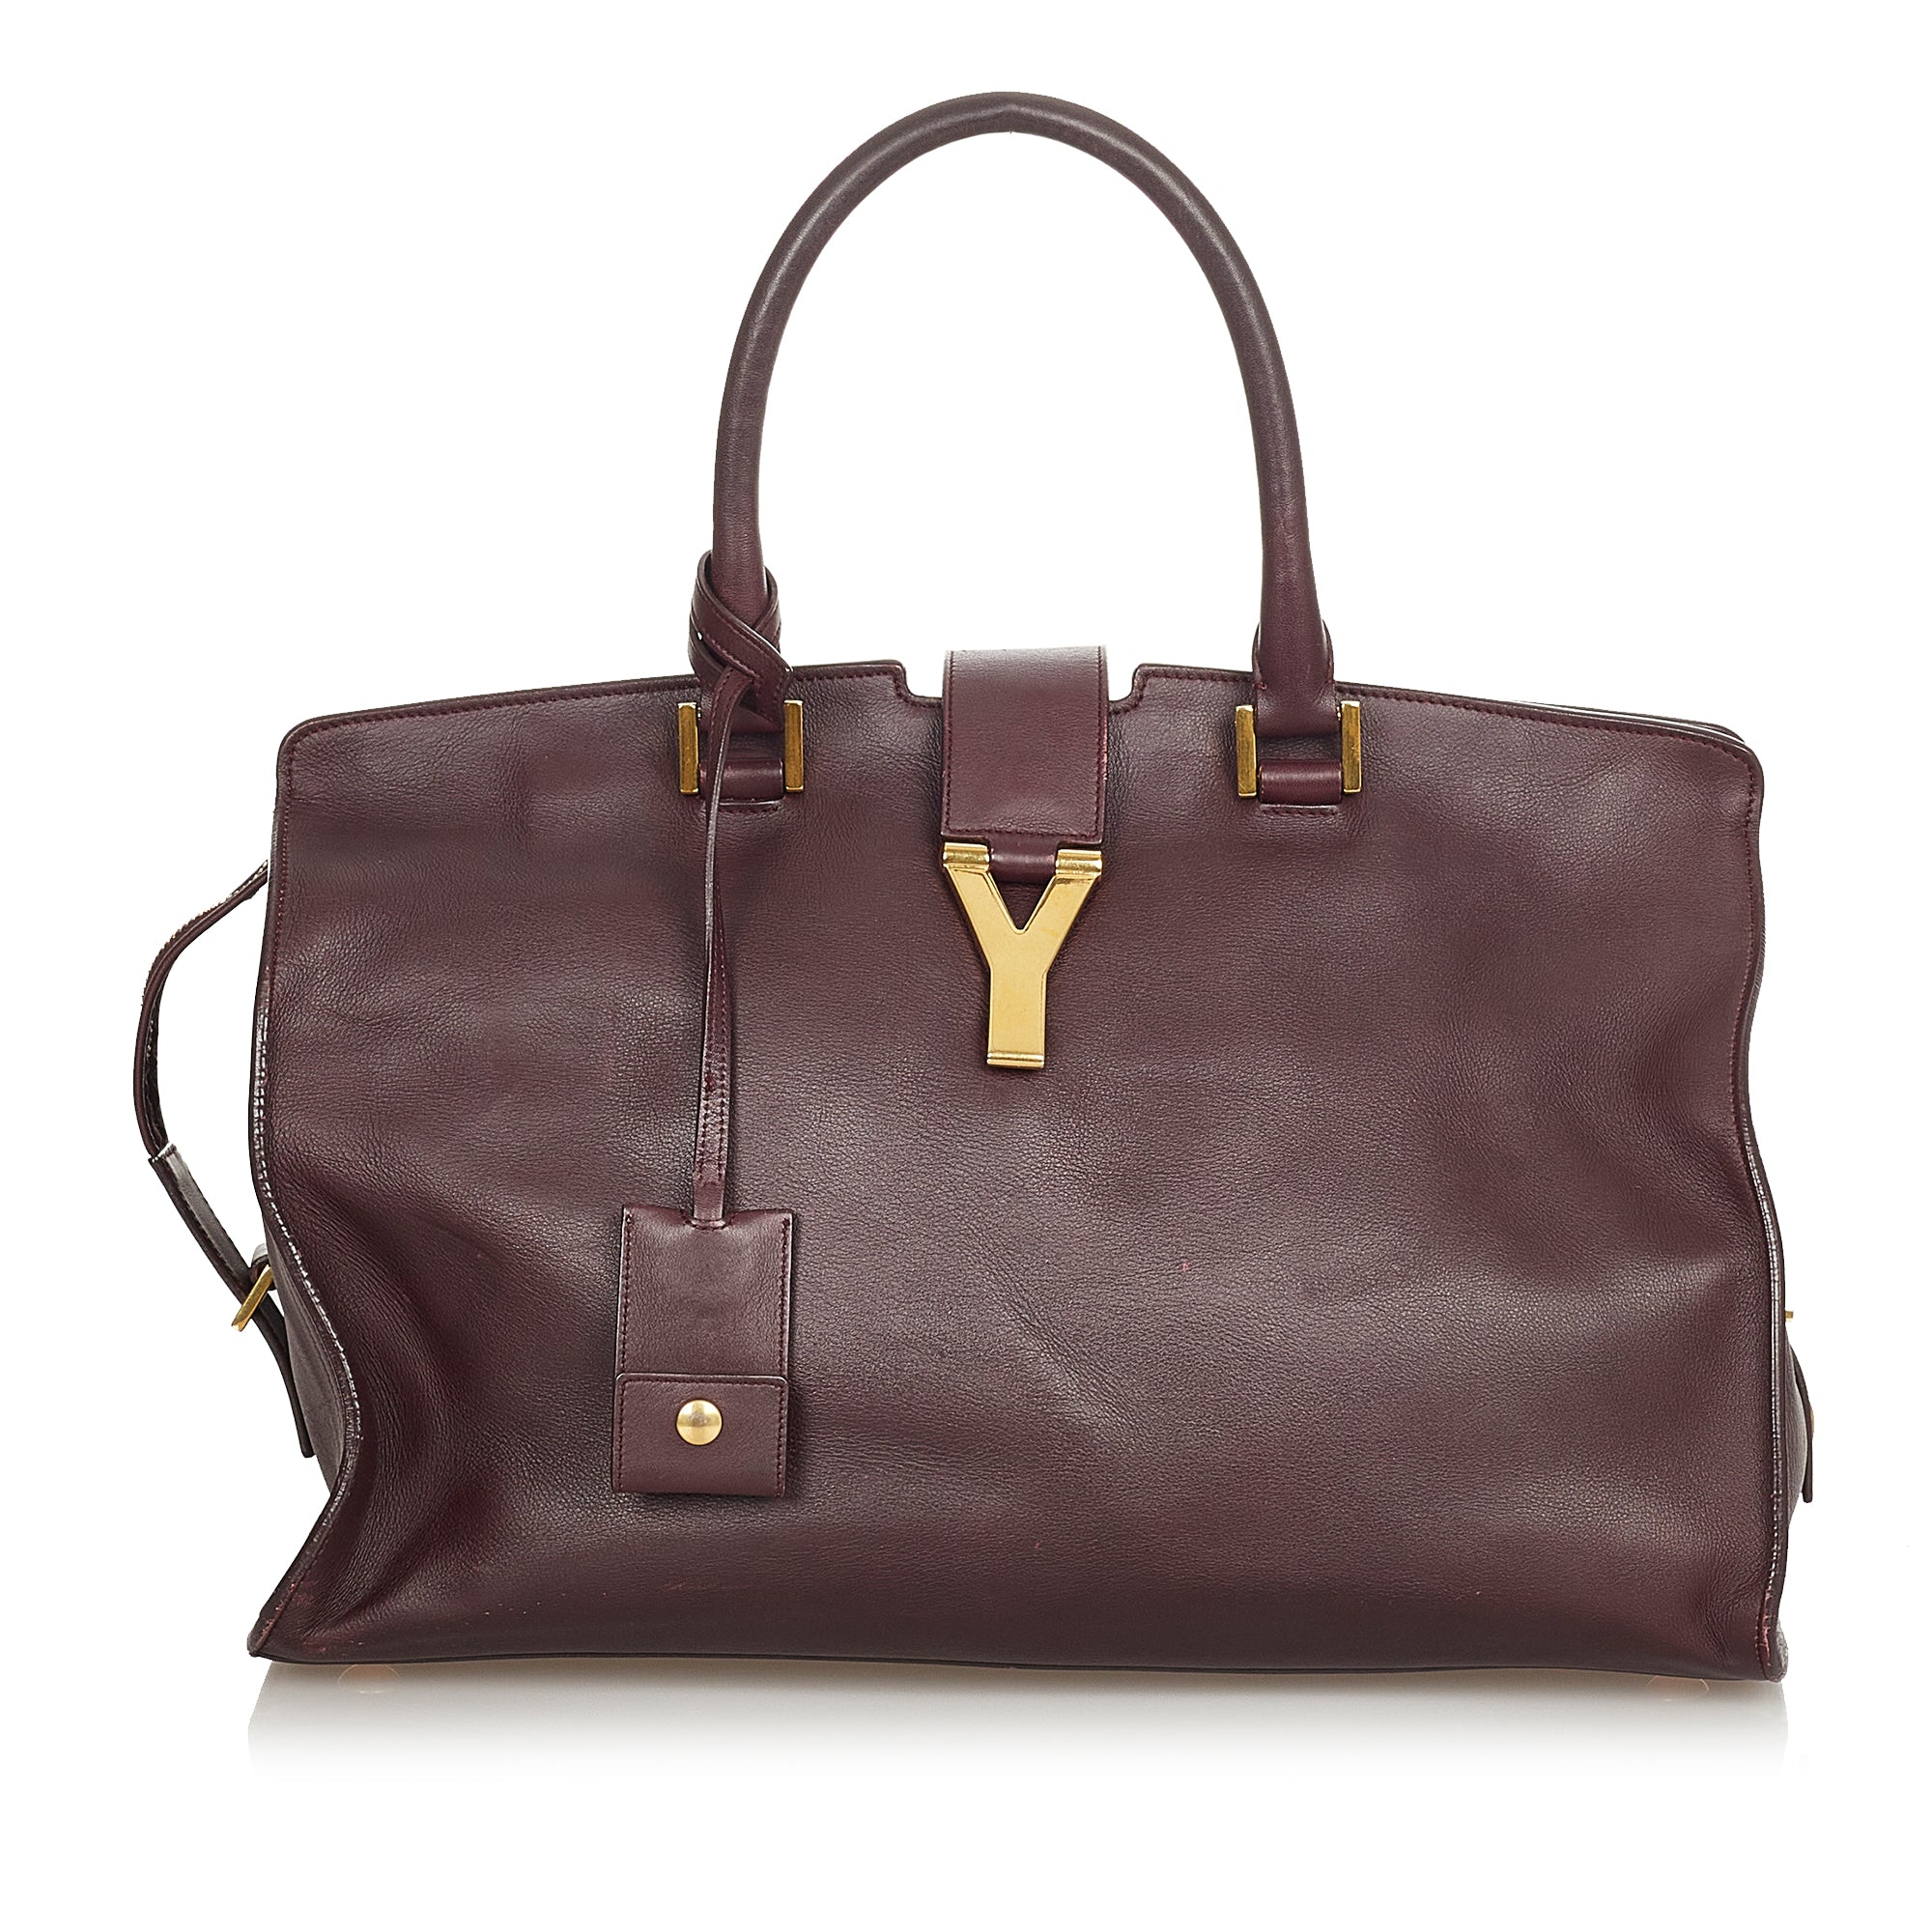 Saint Laurent - Authenticated Handbag - Synthetic Black Plain for Women, Very Good Condition